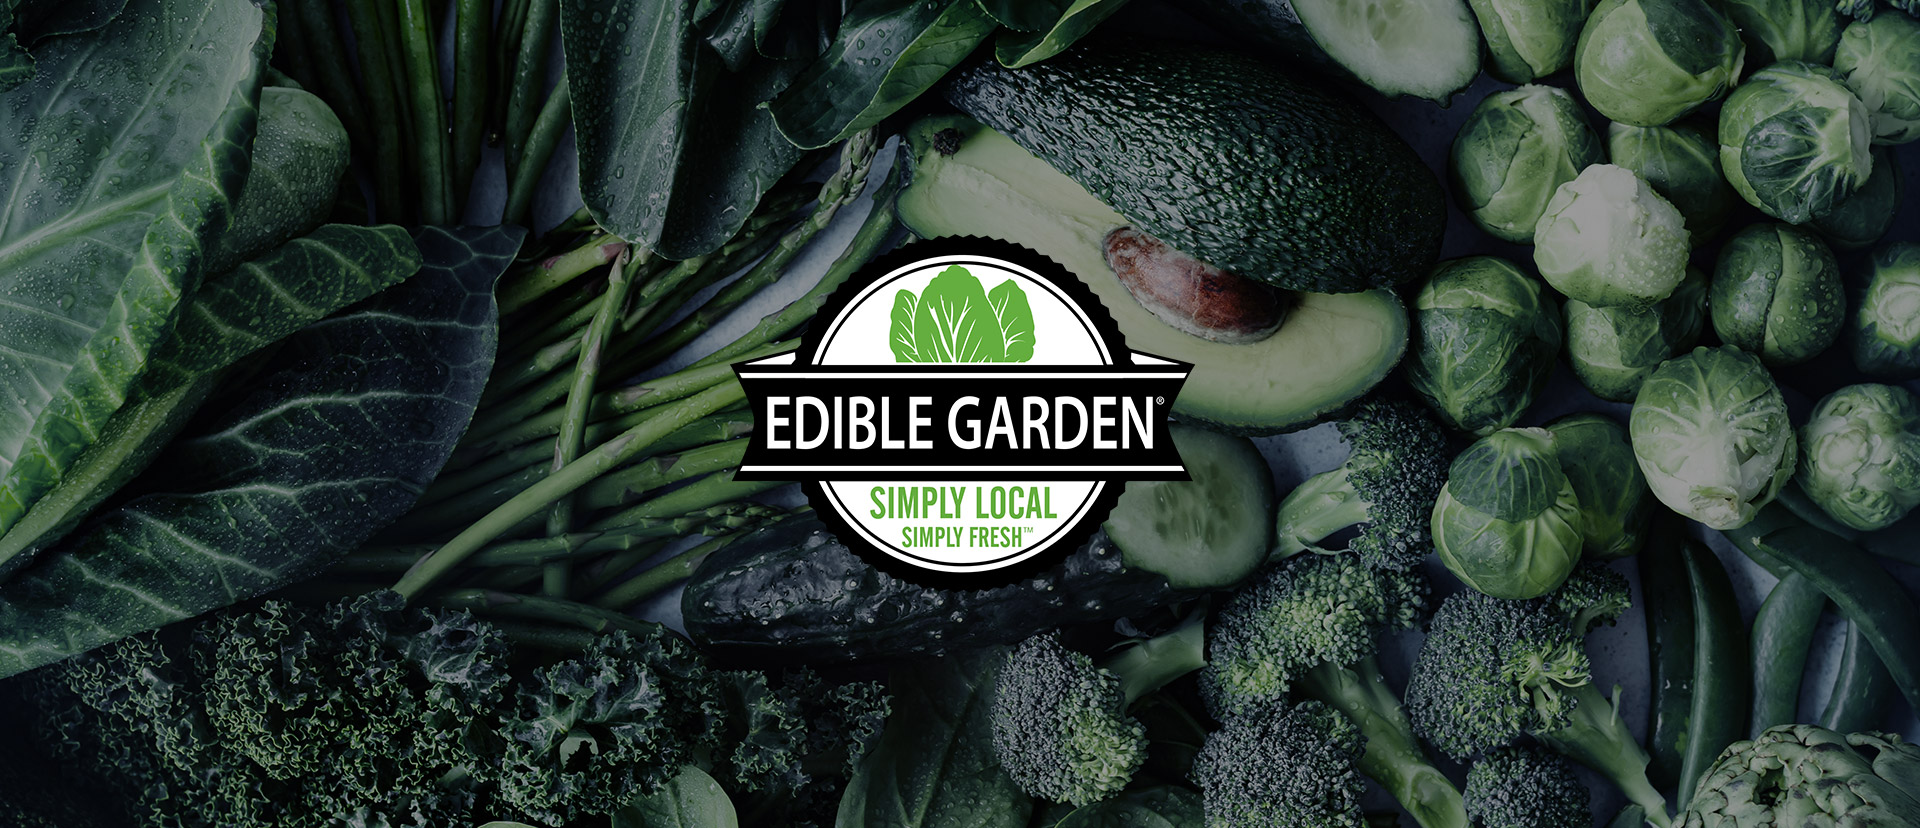 IPO of Edible Garden: 21st Century Greenhouses